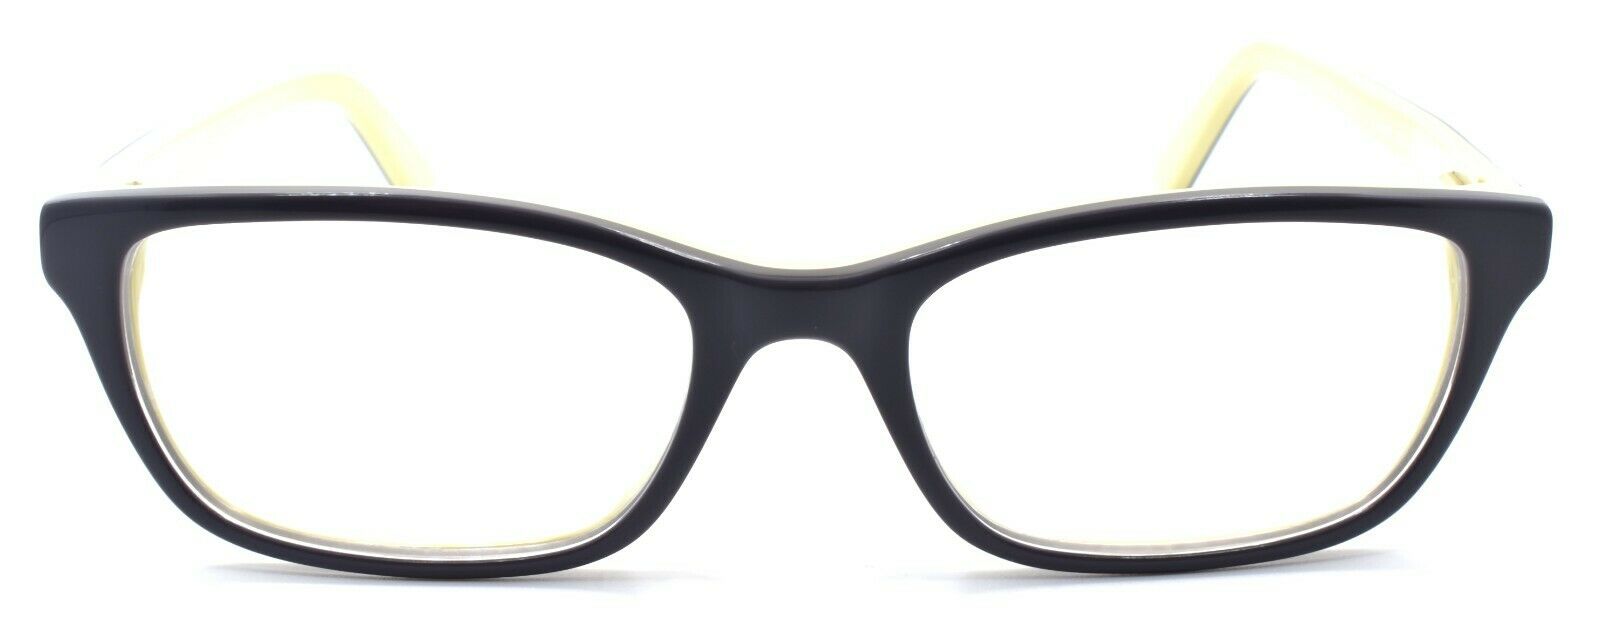 2-Calvin Klein CK18541 031 Women's Eyeglasses Frames 50-17-135 Slate / Yellow-883901105124-IKSpecs